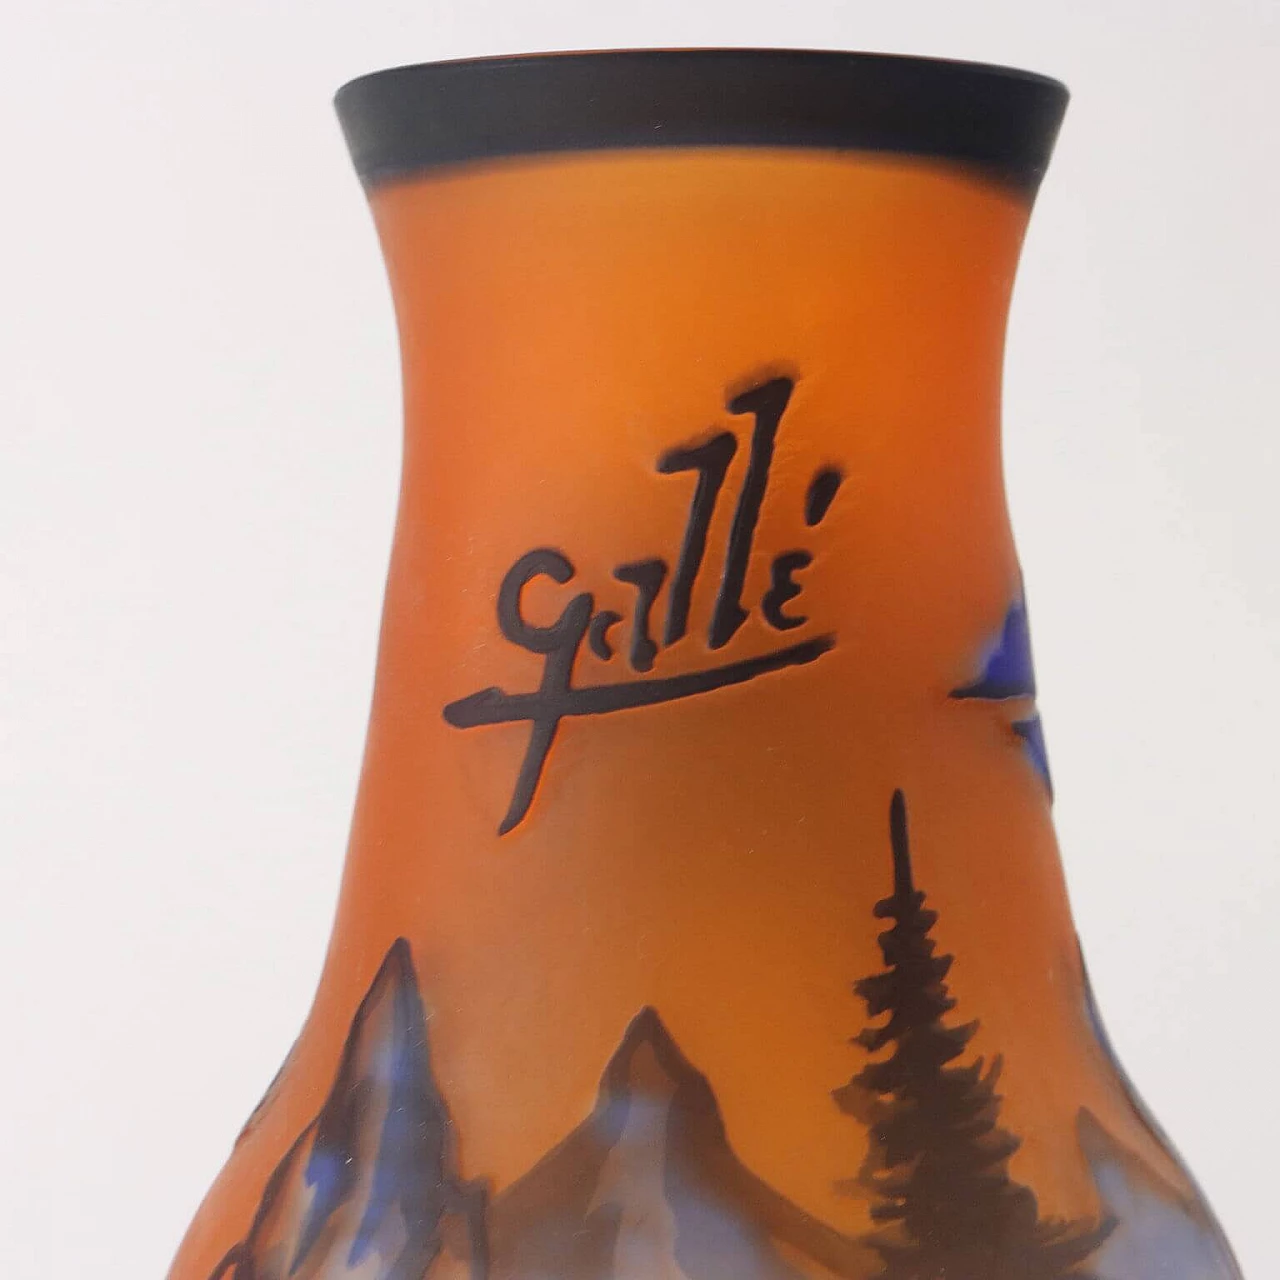 Polychrome glass vase by Gallé 5